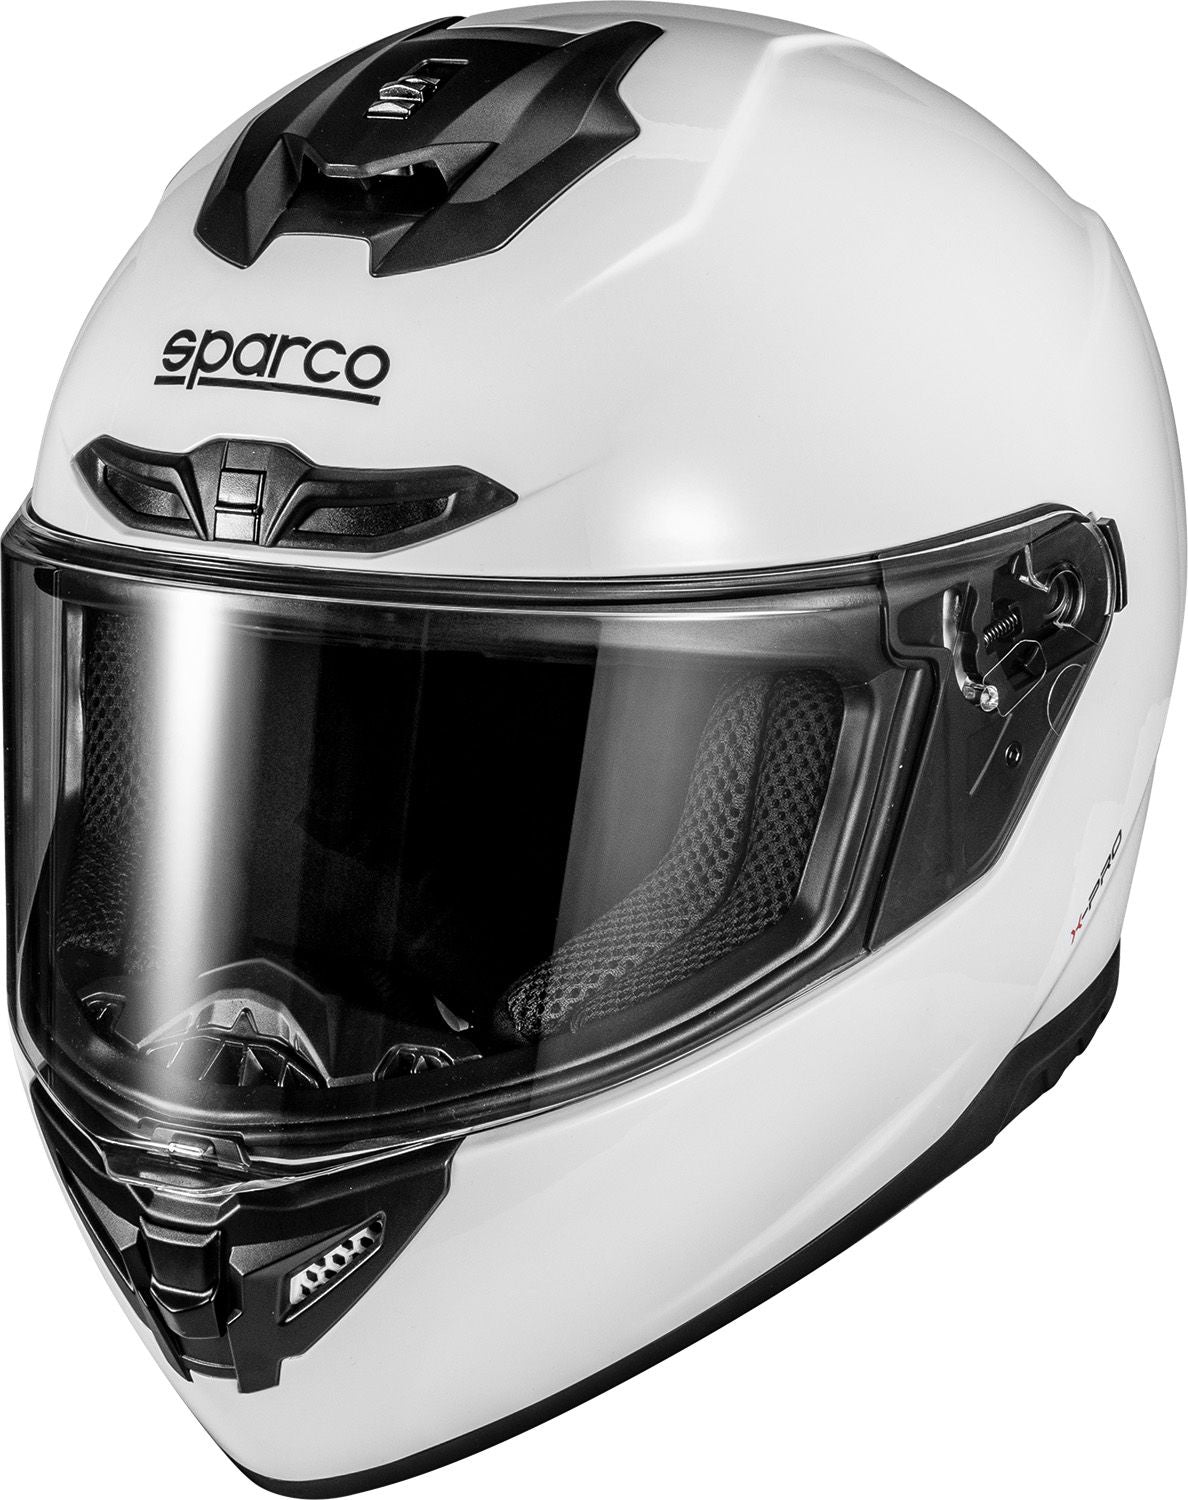 Sparco Helmet X-Pro, White